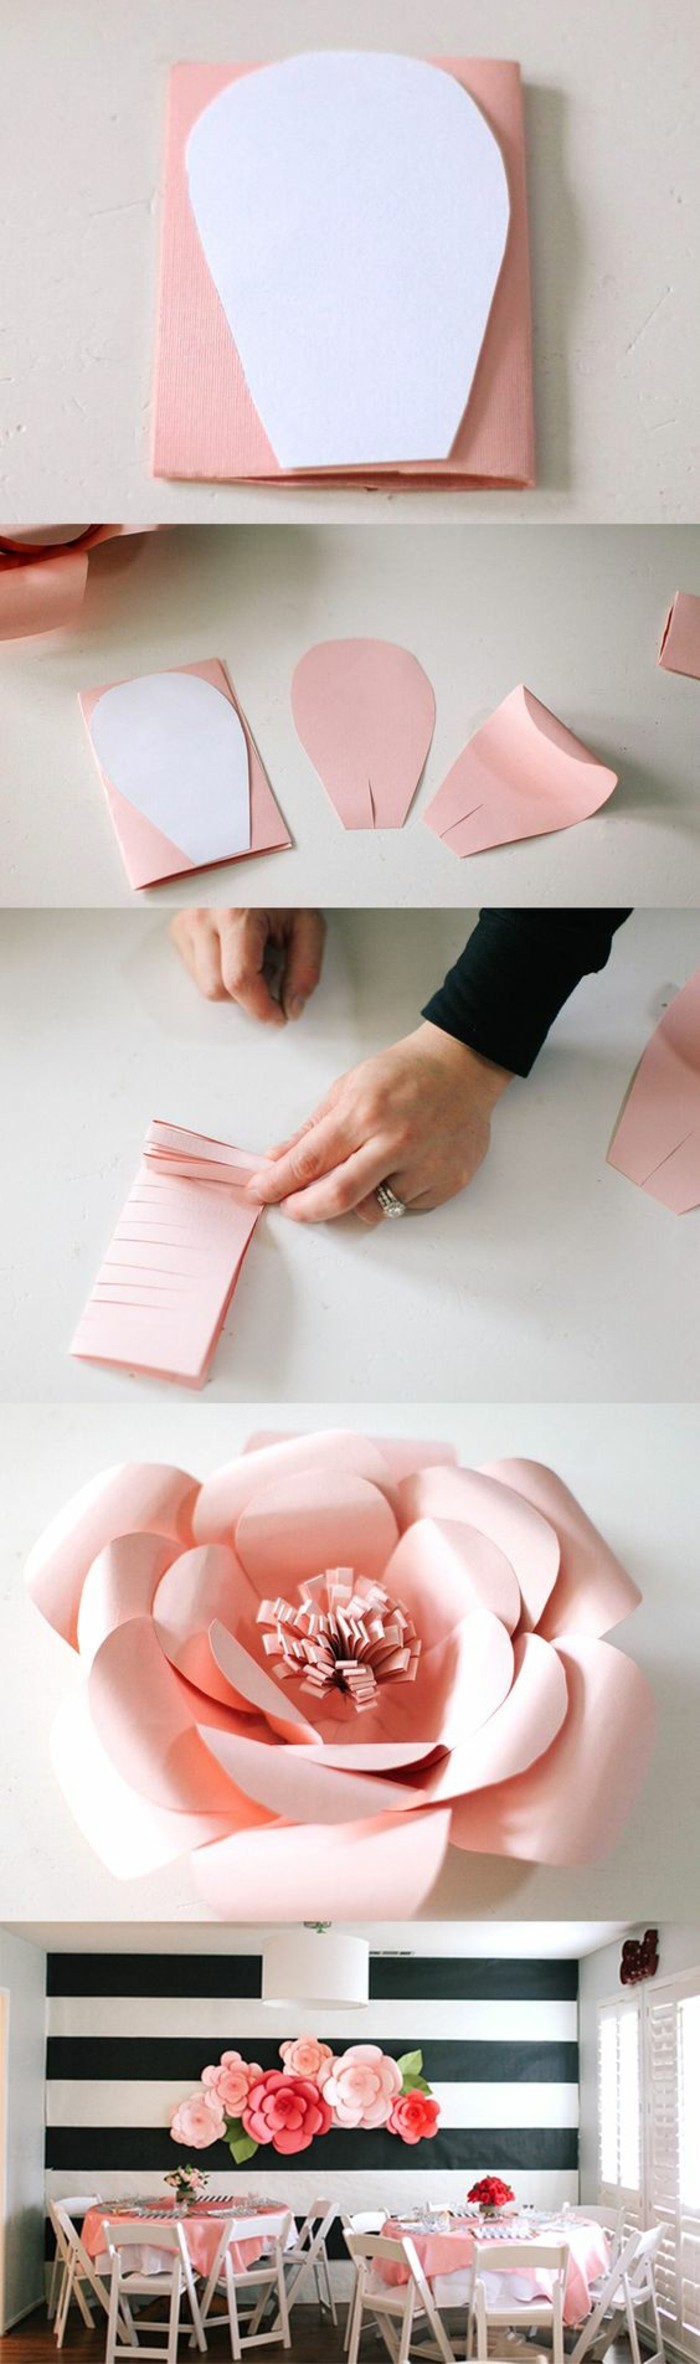 2-wanddeko-se-odluka fruhlingdeko-bastaln-rosan-Tinker-made papier-